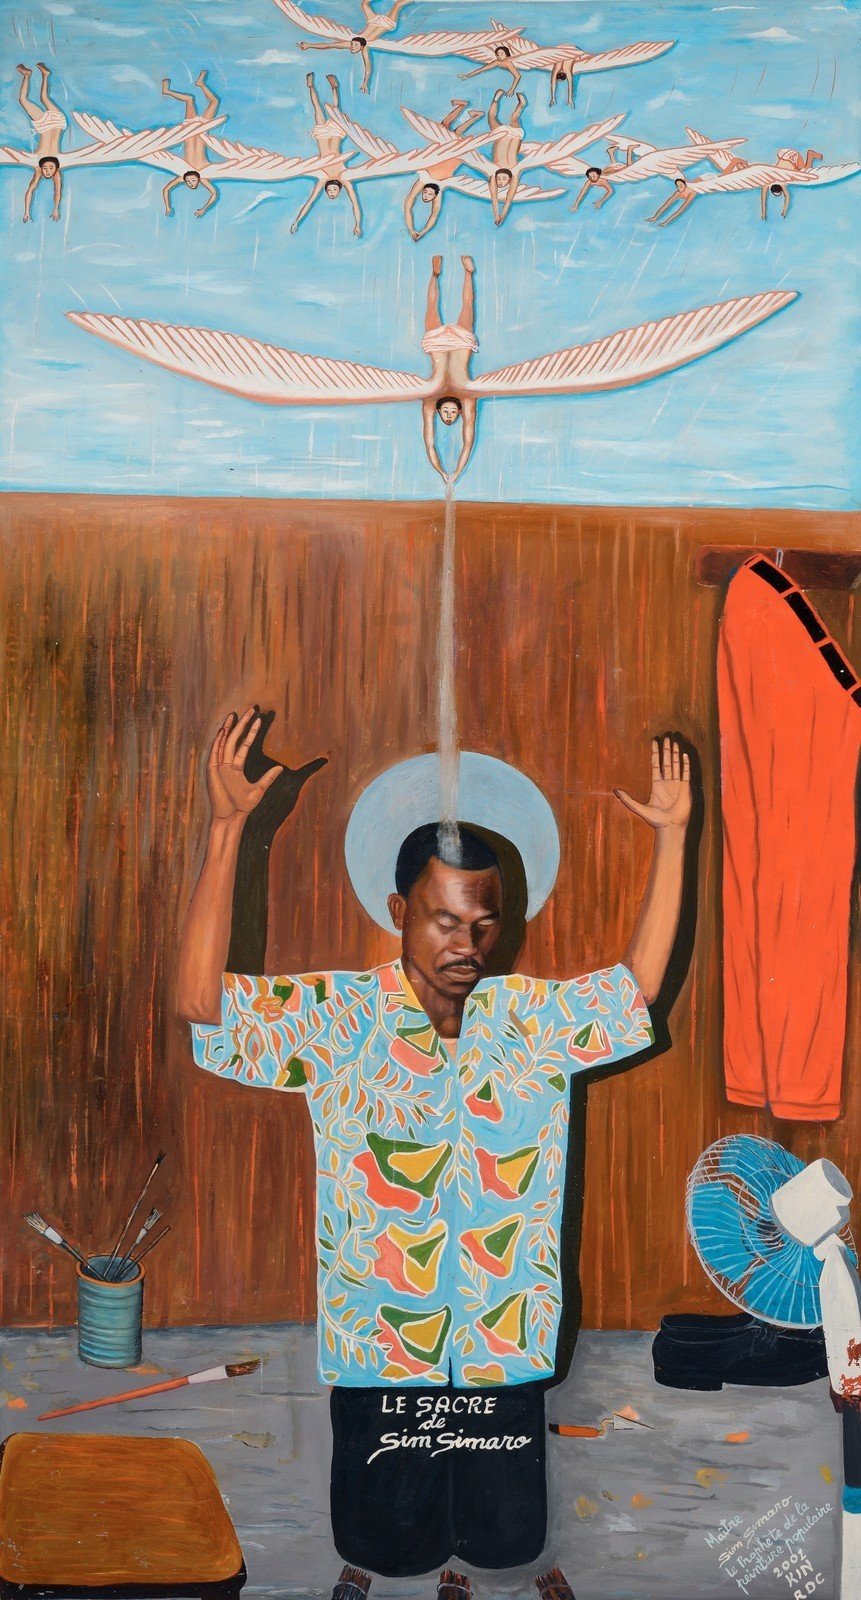 Sim Simaro (&deg;1952). The Consecration of Sim Simaro. Kinshasa, 2001. Oil on canvas. RMCA Collection, Tervuren